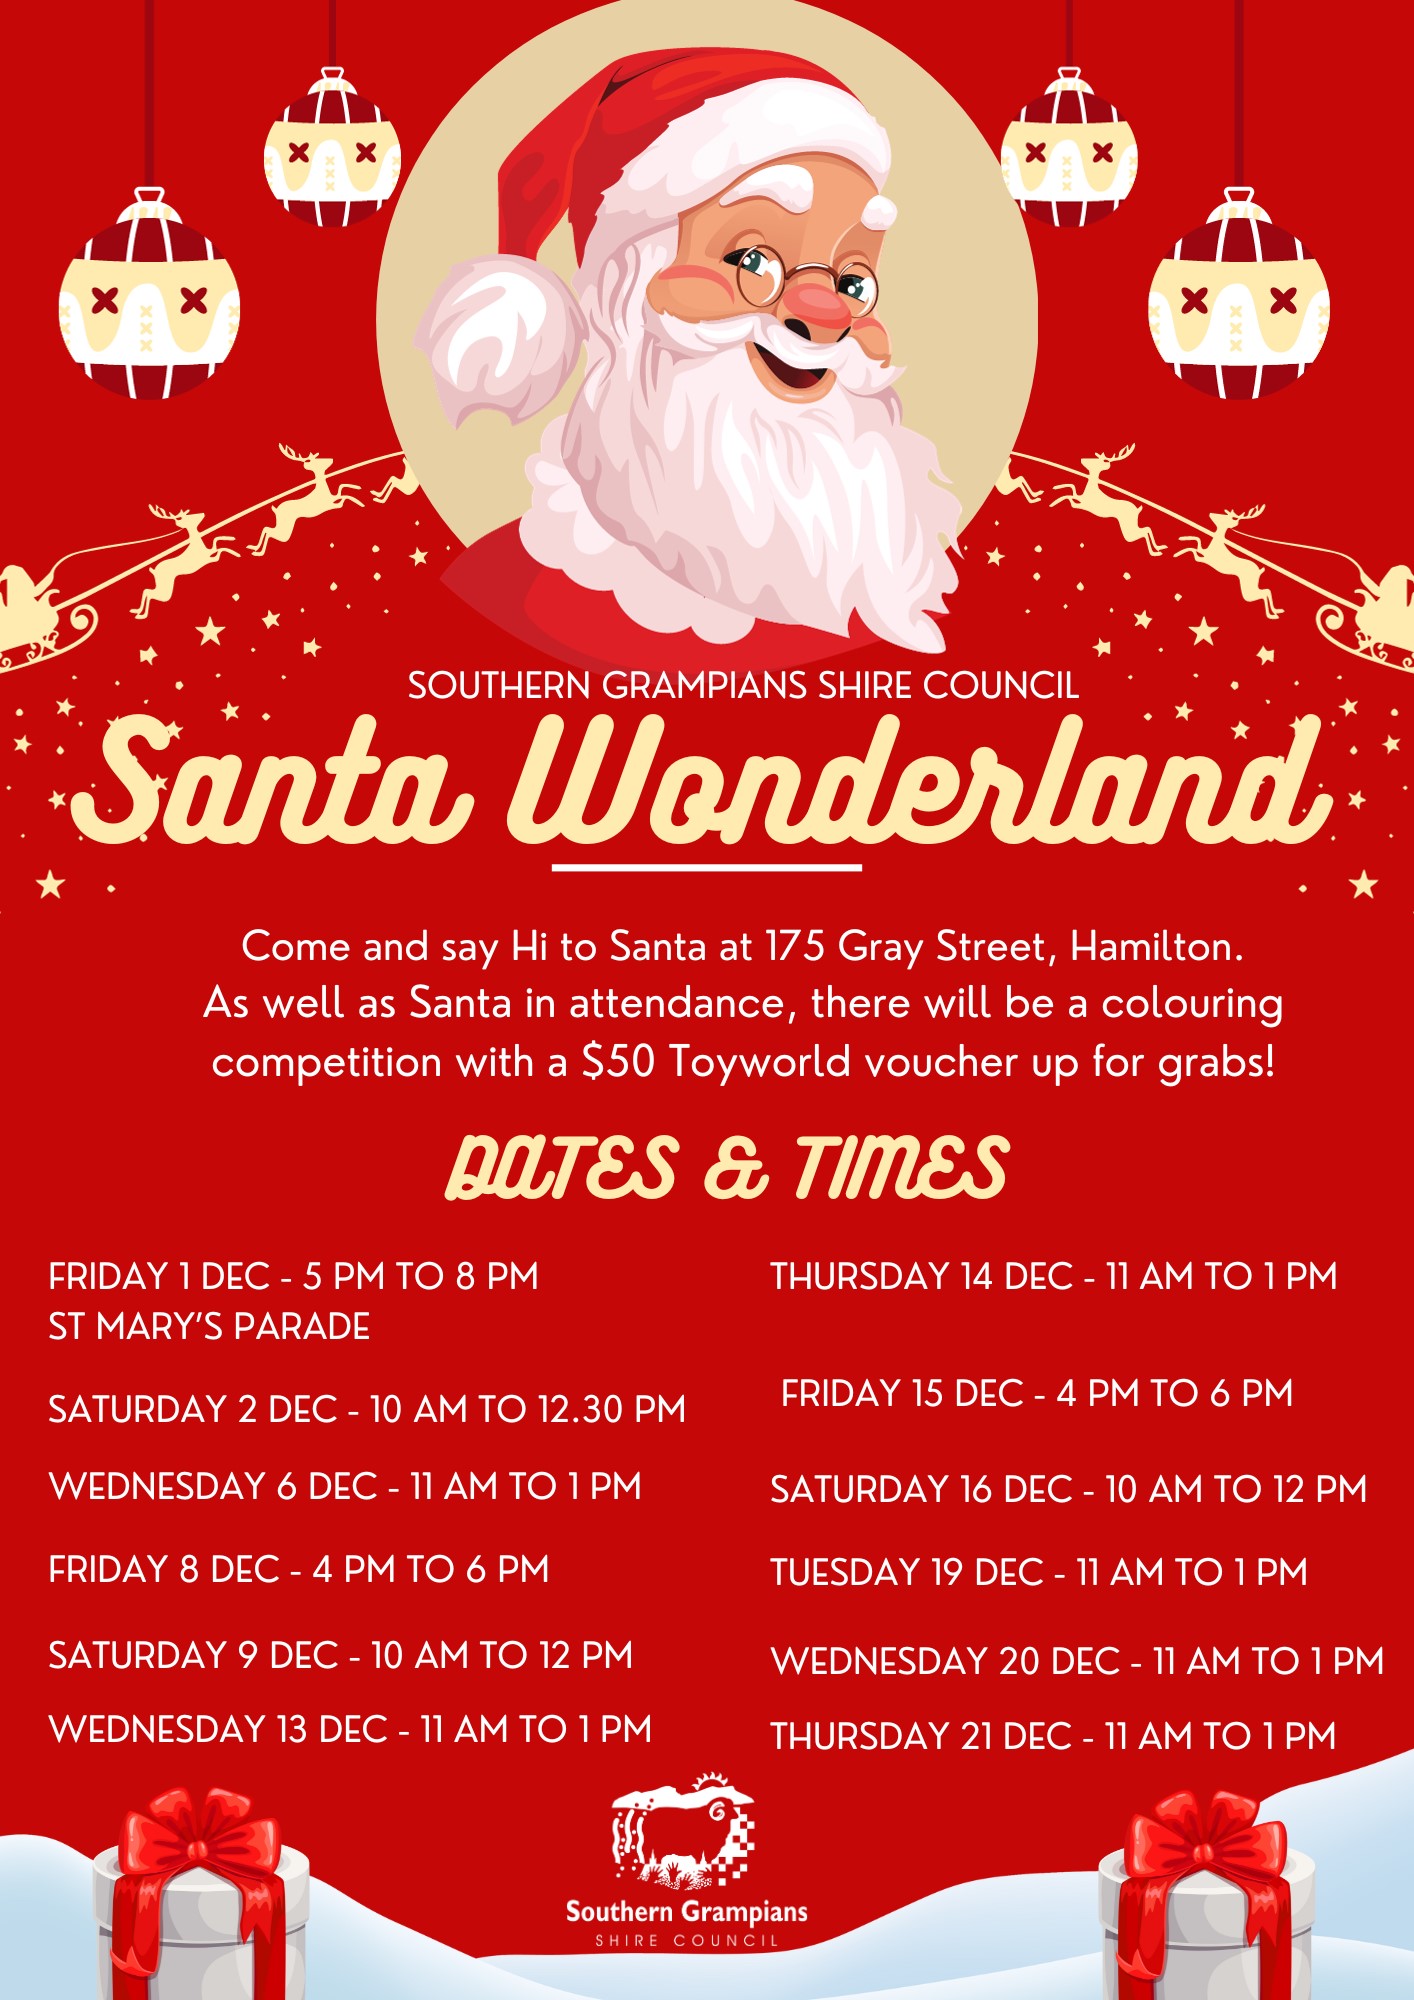 Santa visit schedule